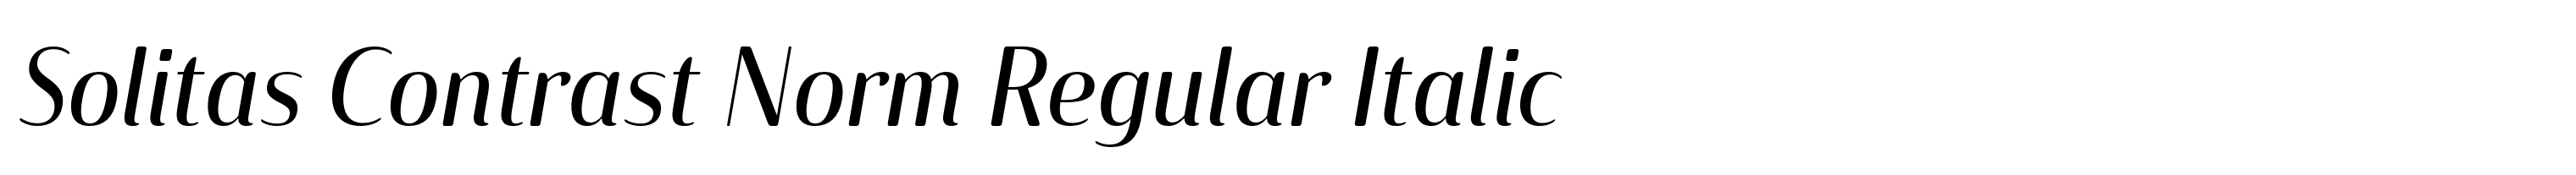 Solitas Contrast Norm Regular Italic